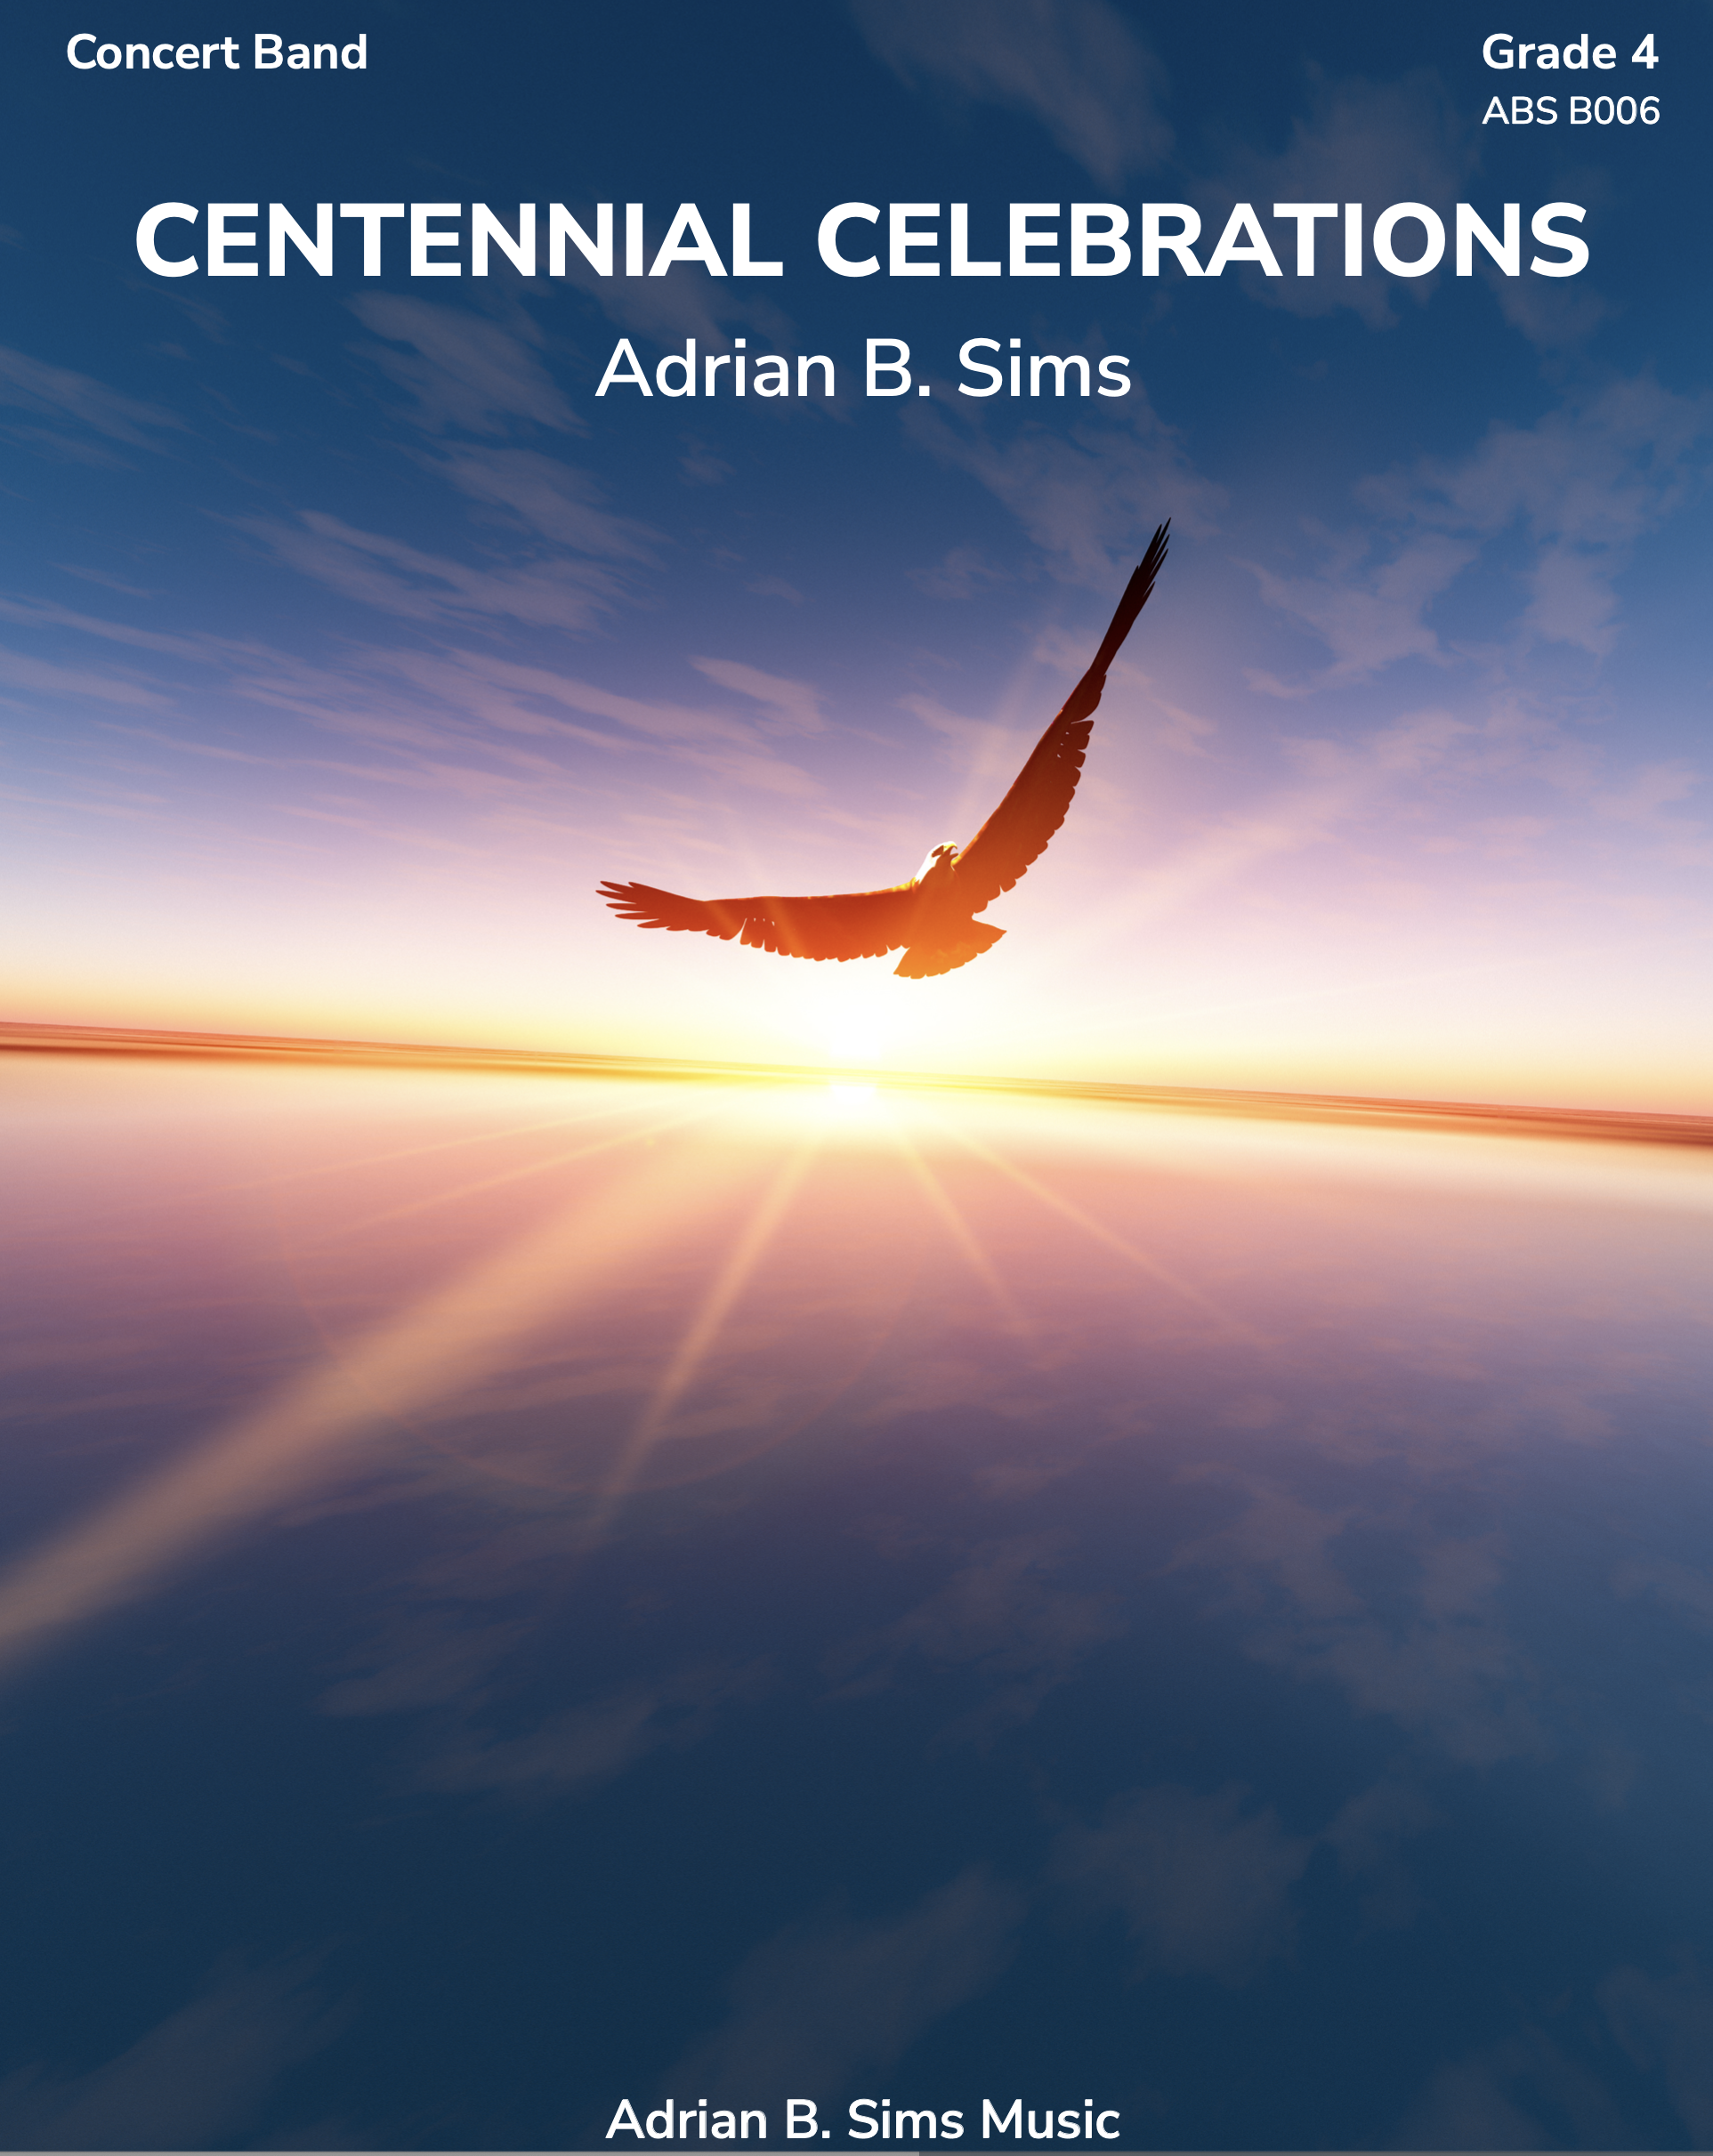 Centennial Celebrations by Adrian B. Sims